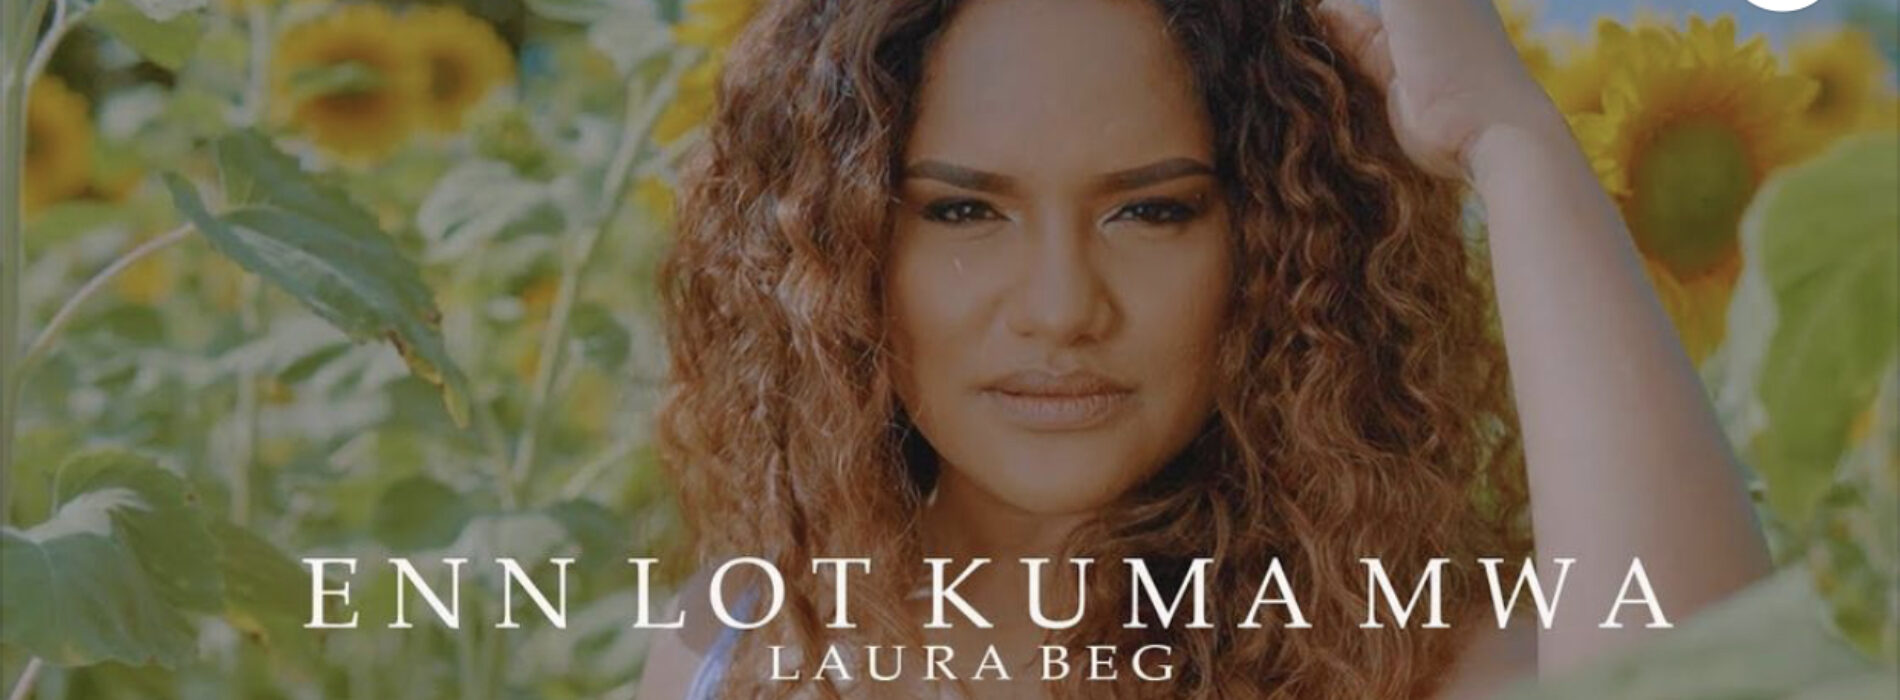 Laura Beg – Enn lot kuma mwa – (Clip officiel) – Décembre 2022